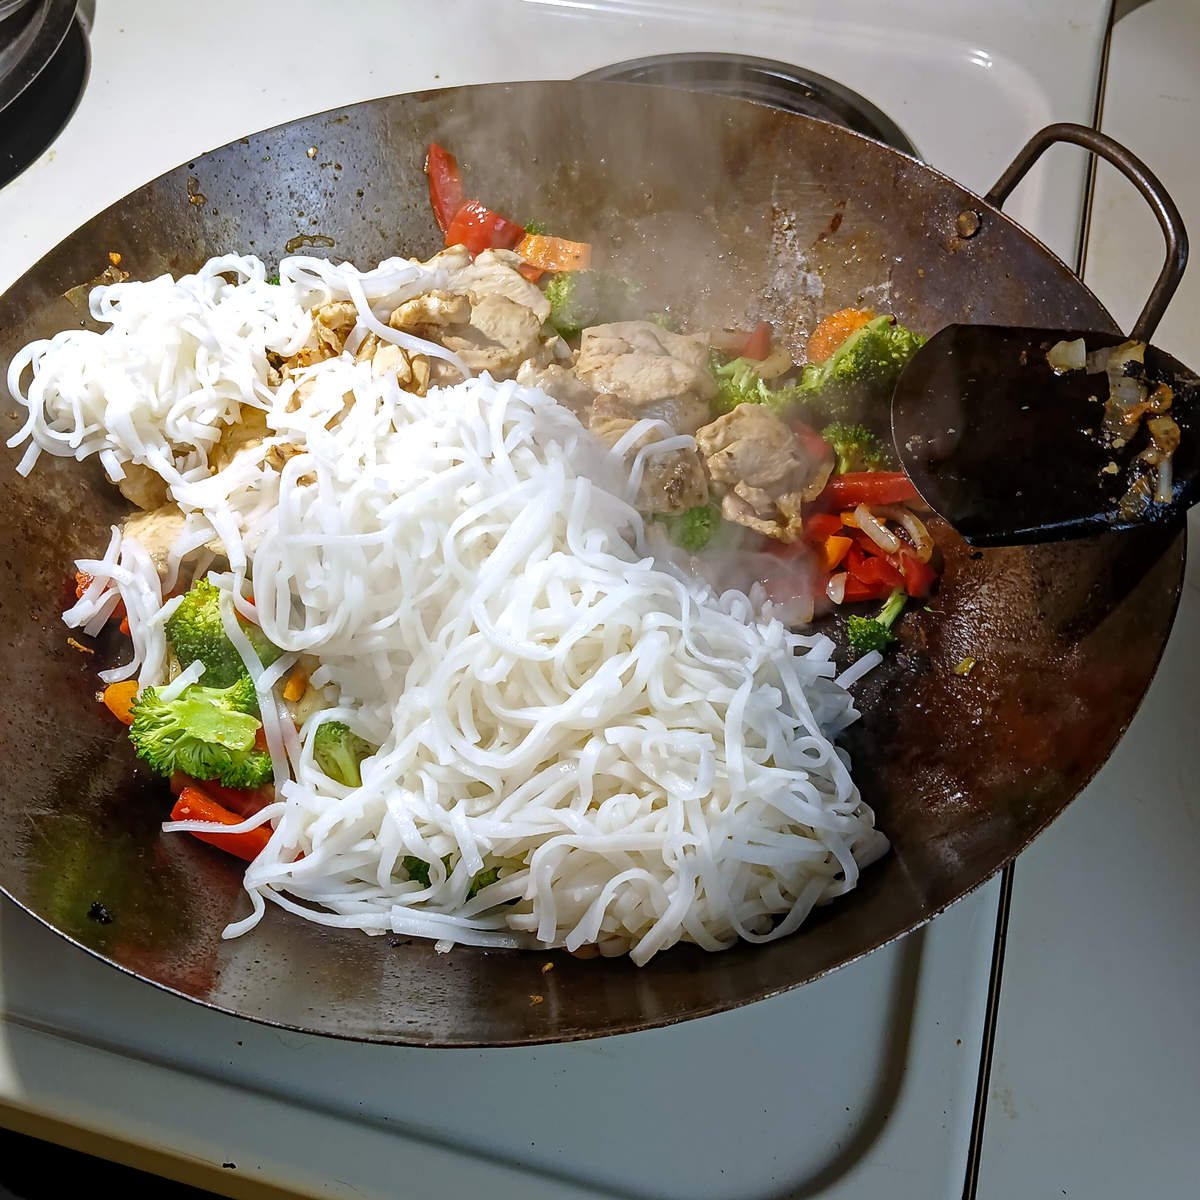 Low sodium chicken stir fry combined-ingredients in wok.